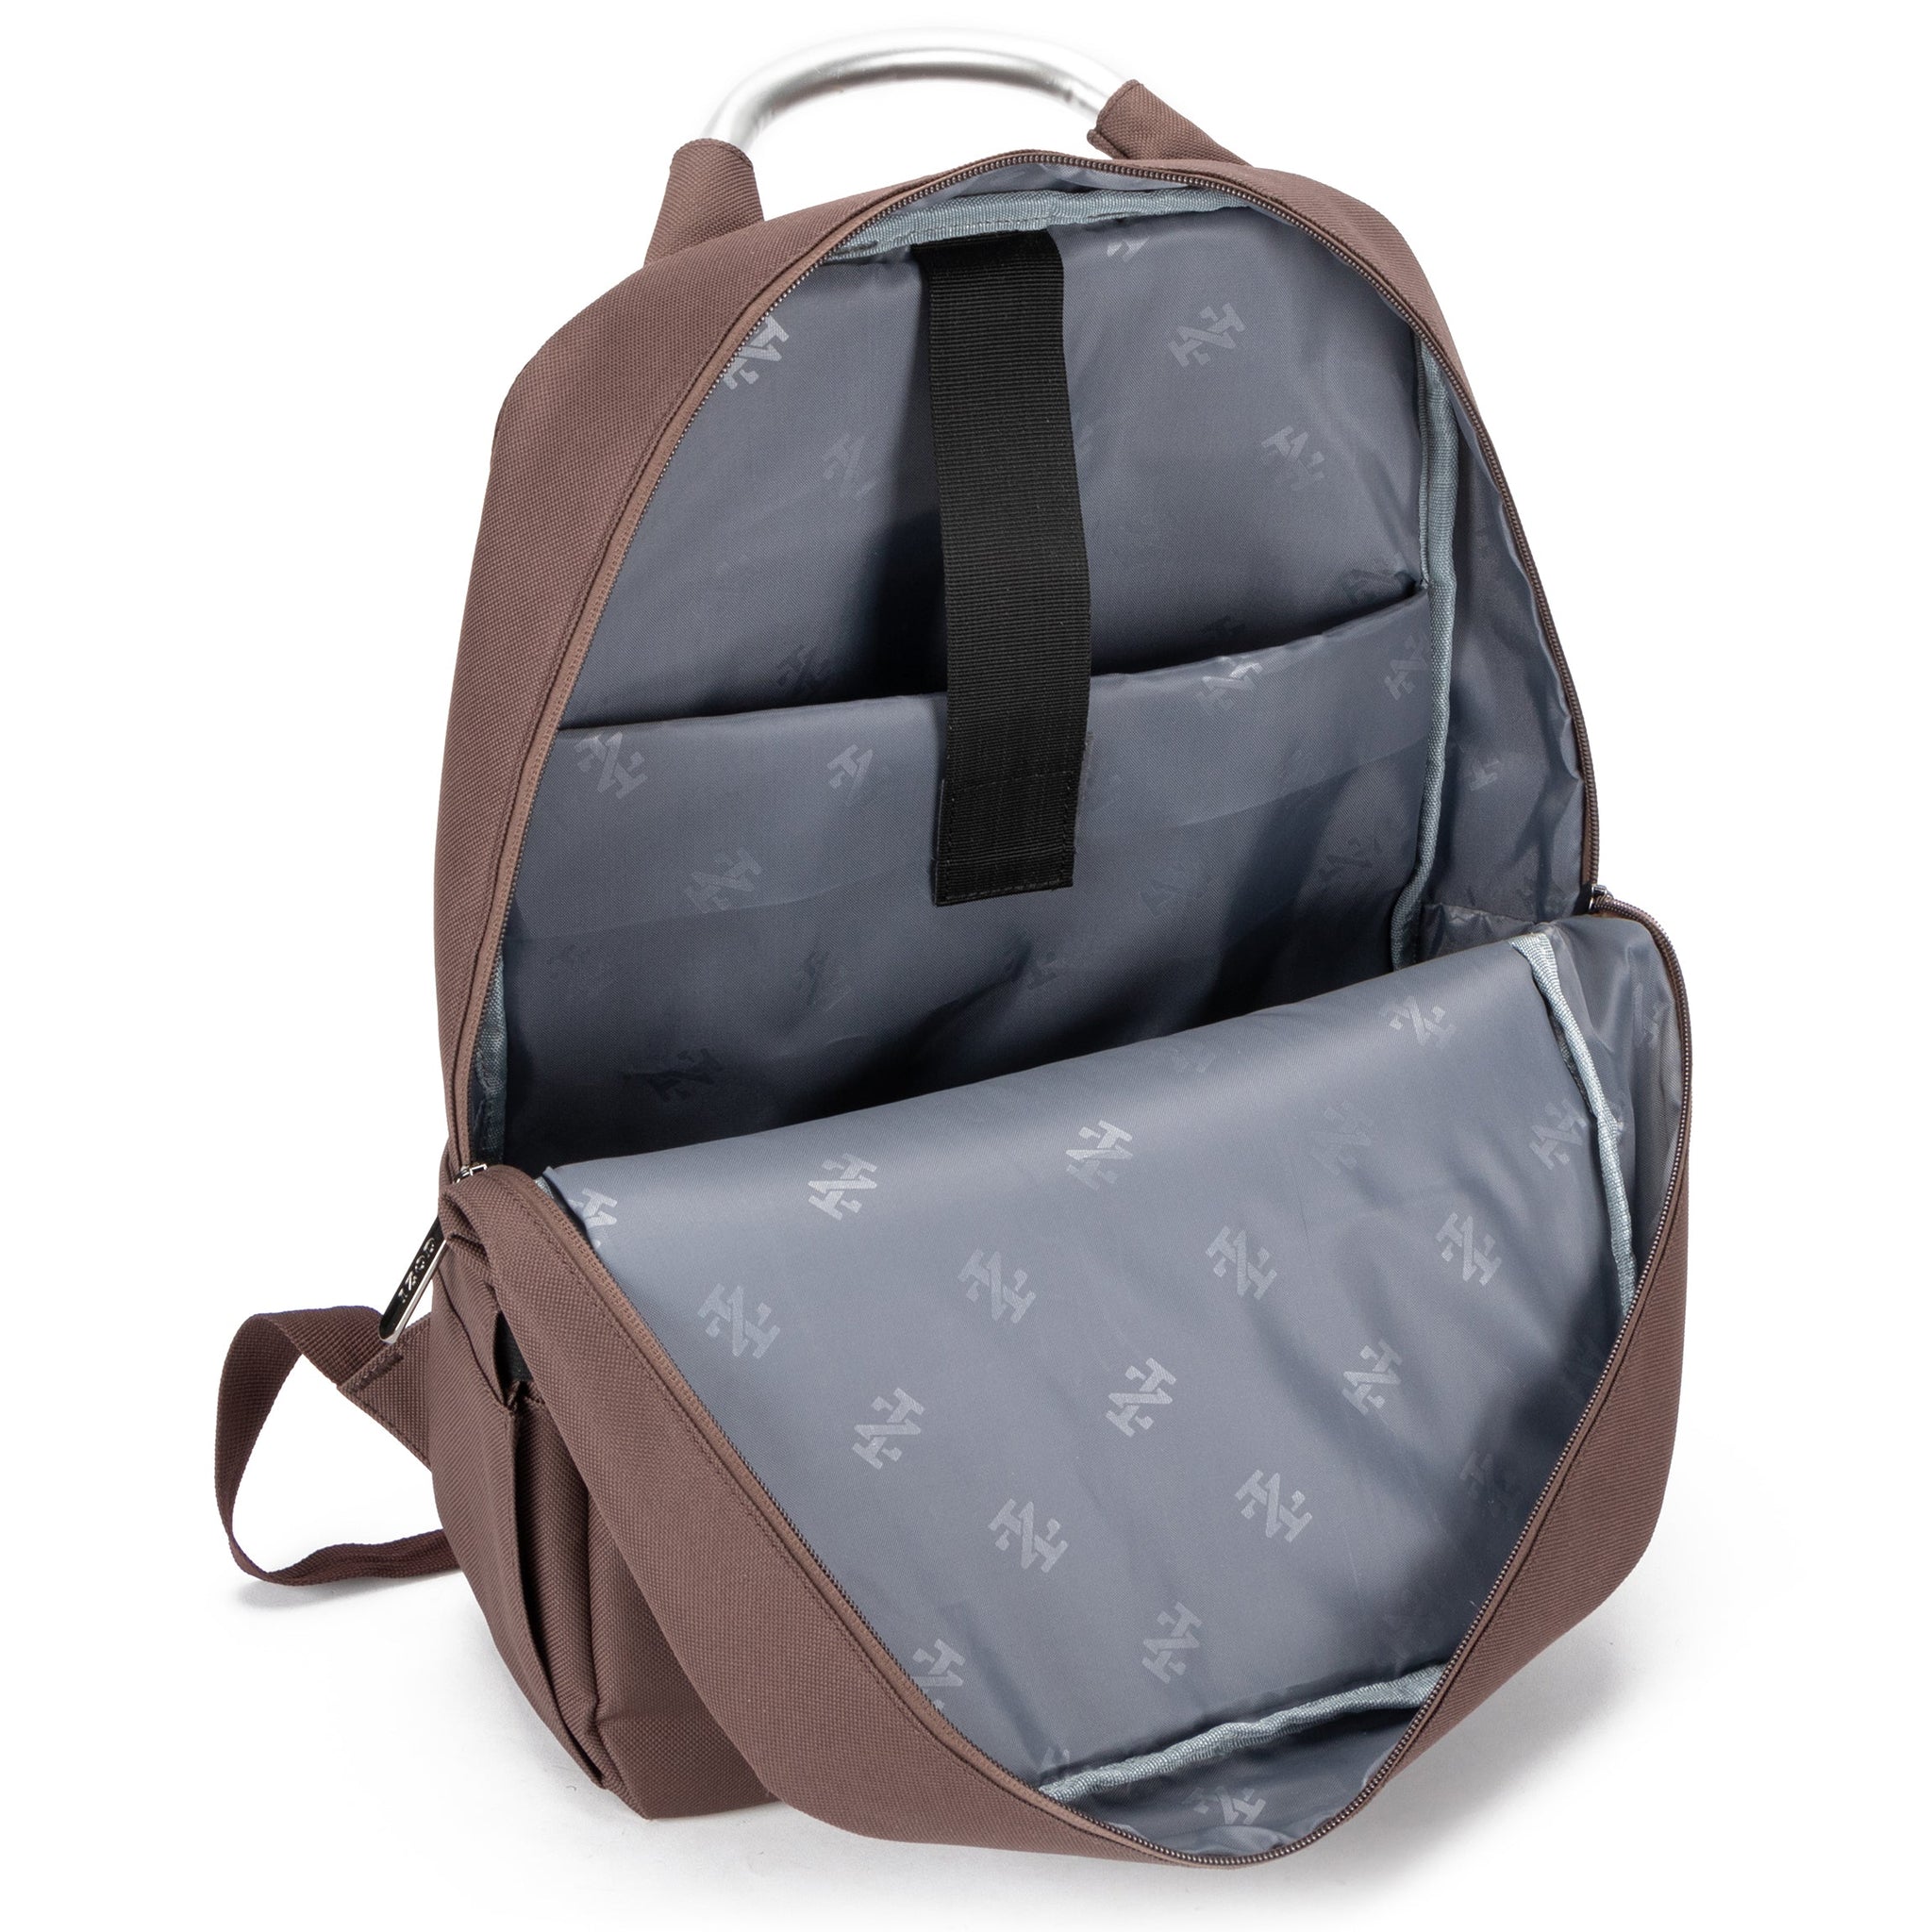 IZOD Aaron Slim 15.6" Laptop Backpack with USB Charging Port